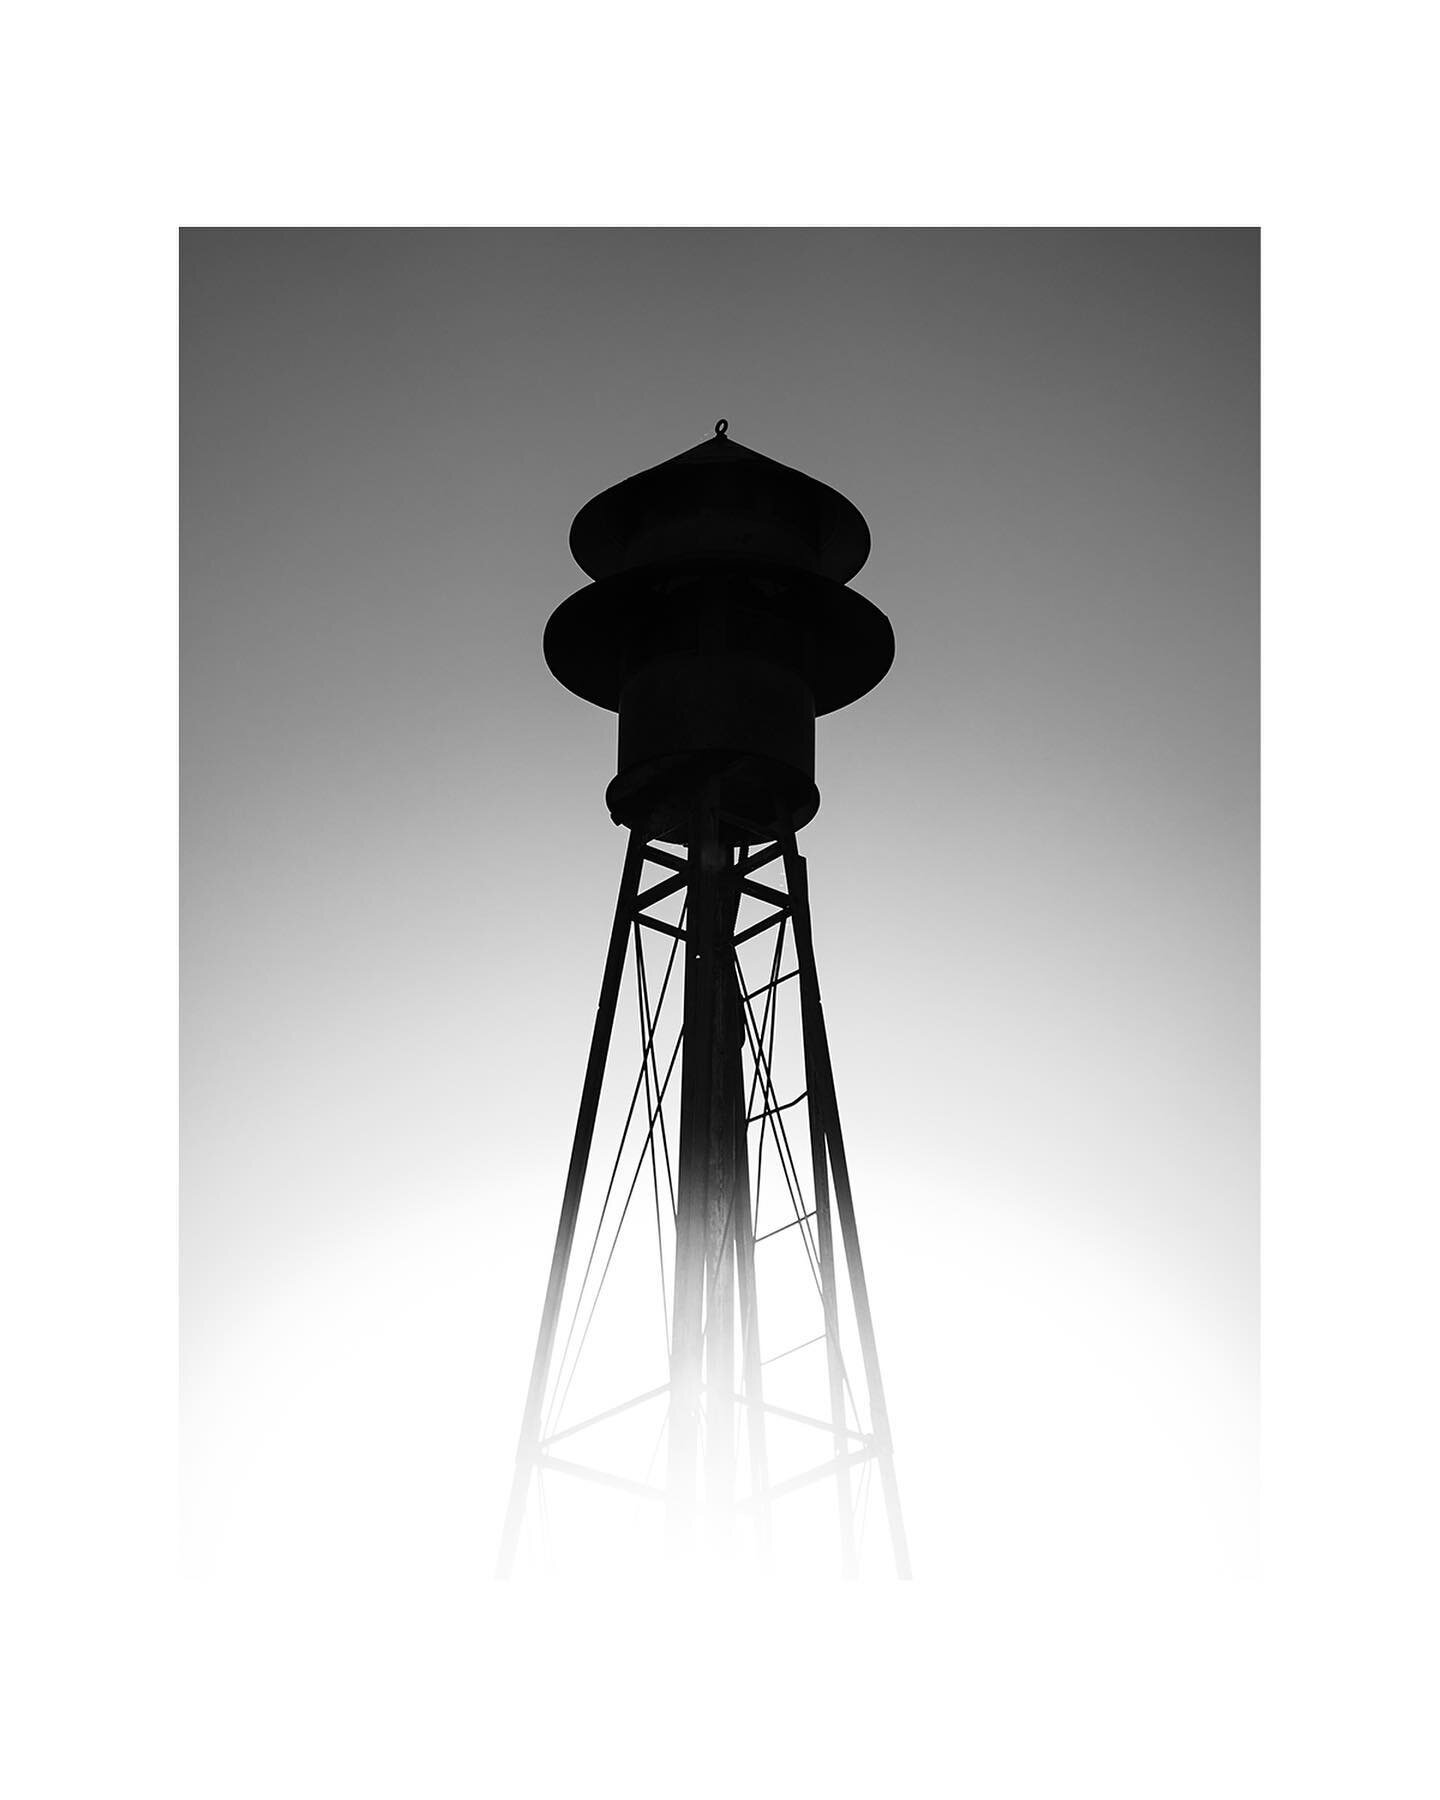 💡 🔊
&bull;
&bull;
&bull;
&bull;
#michigan #lighthouse #greatlakes #munisingmichigan #munising #lakesuperior  #lakesuperiormagazine #blackandwhitesilhouette #silhouette #silhouettes #silhouette_creative #upperpeninsula #navigation #uplife #upperpeni